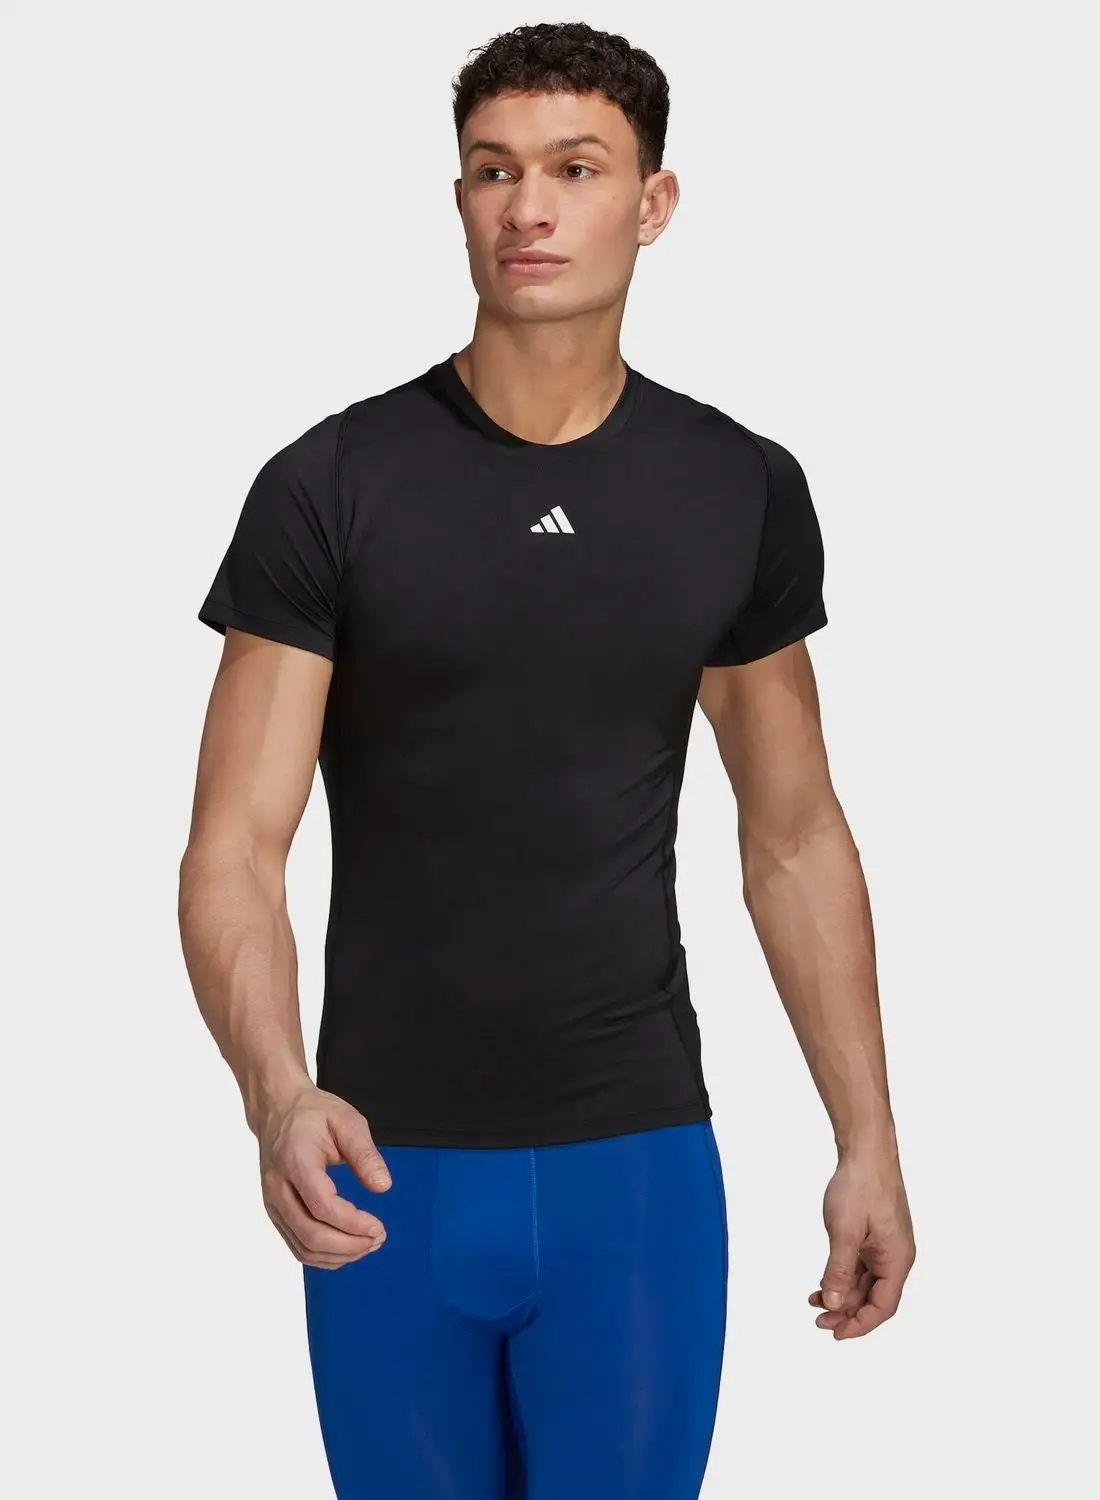 Adidas TechFit T-shirt